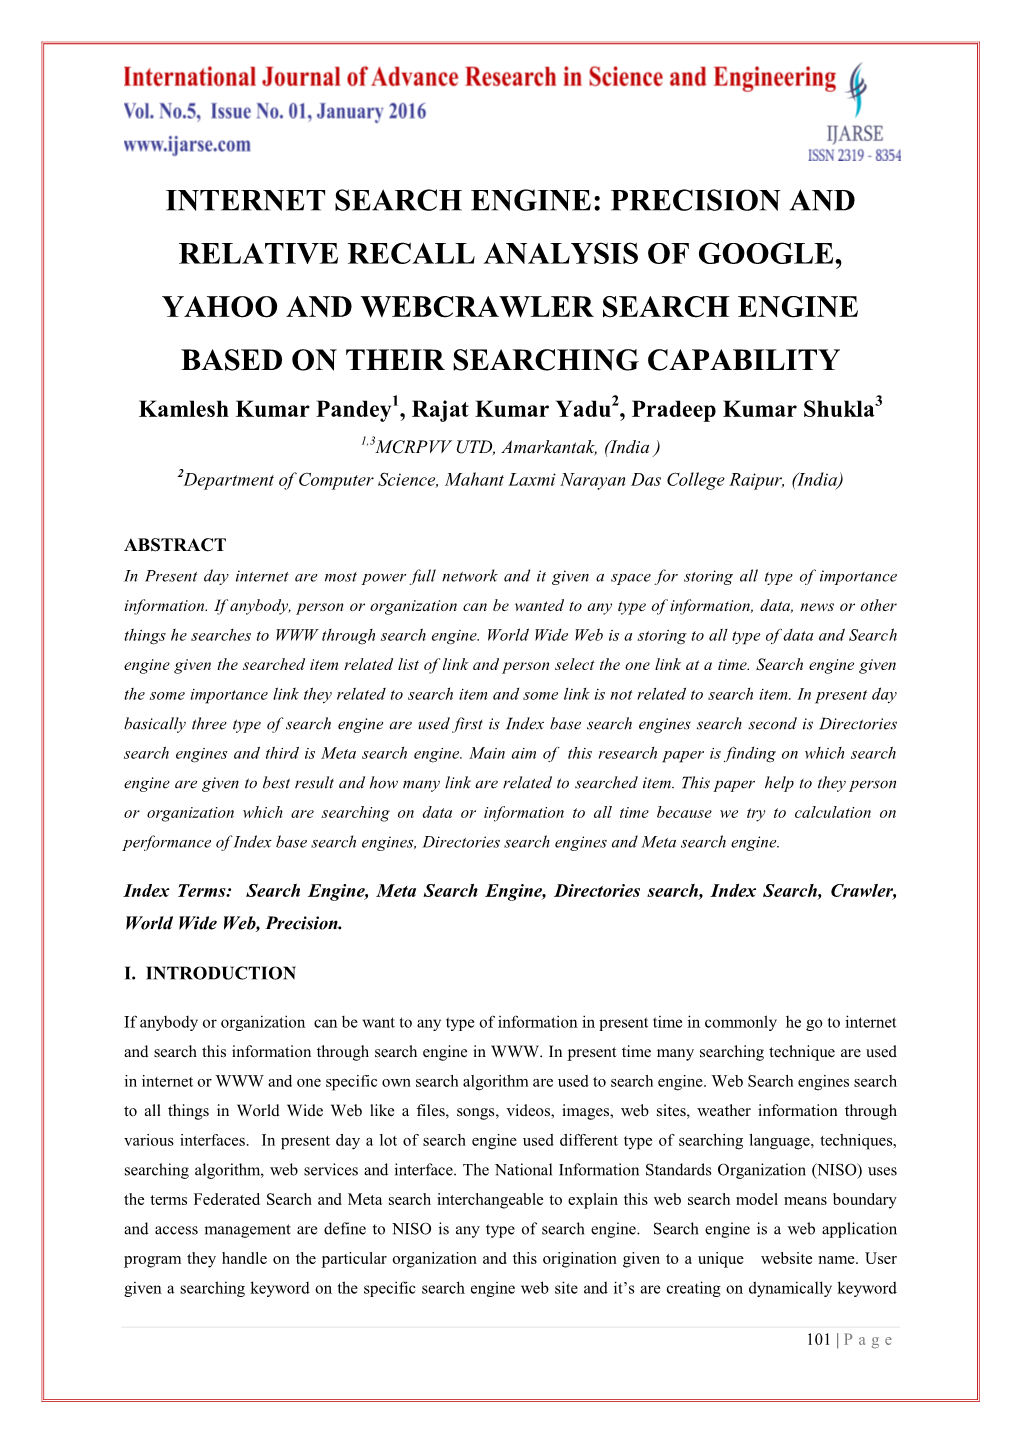 Precision and Relative Recall Analysis of Google, Yahoo